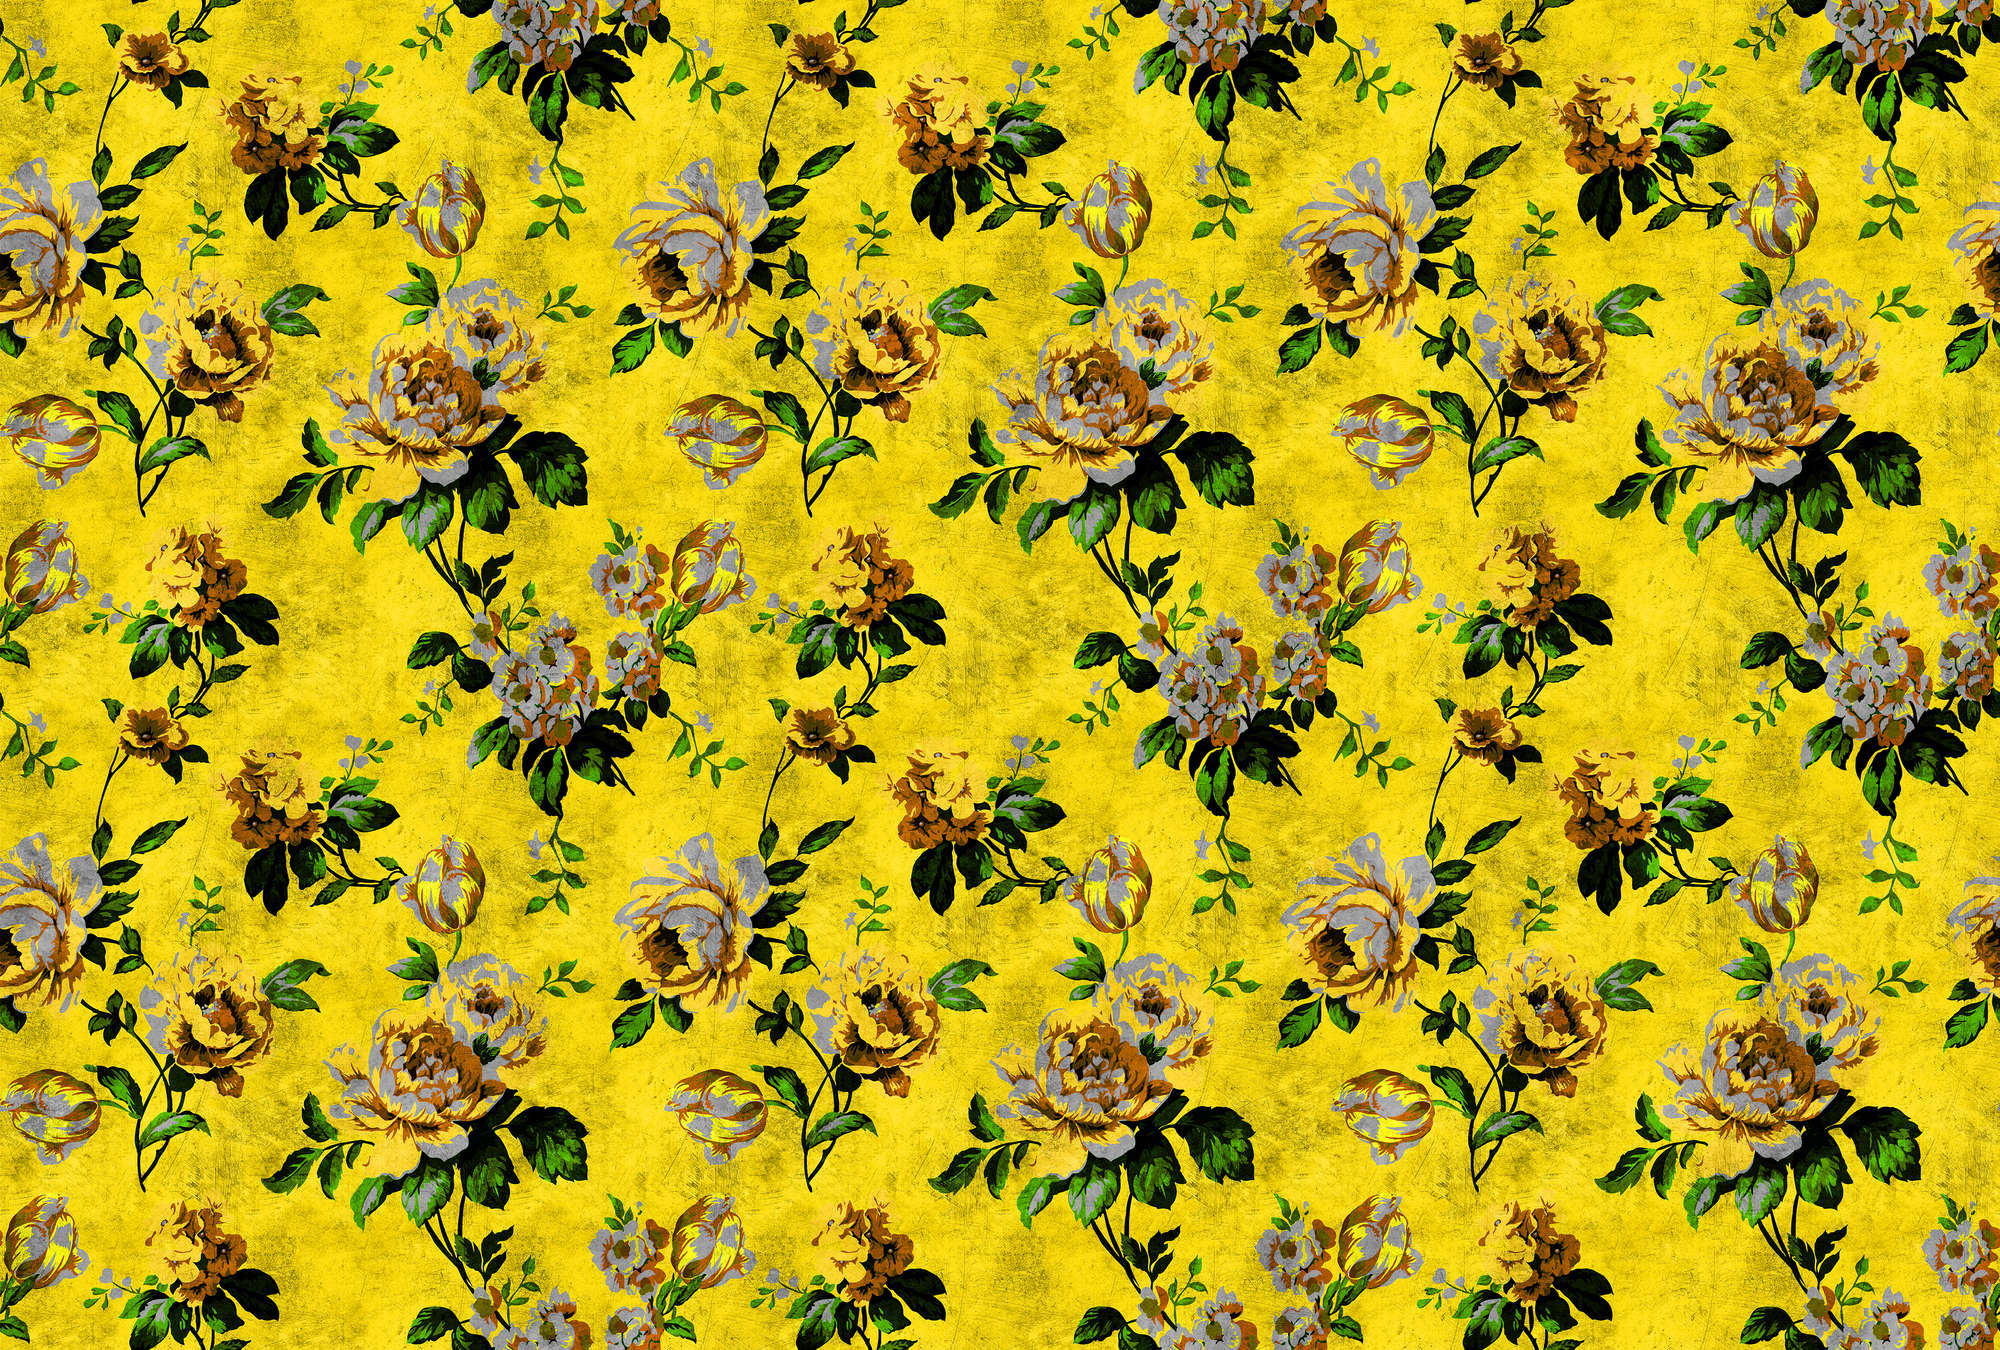             Rosas silvestres 5 - Papel pintado con foto de rosas en estructura rasposa en aspecto retro, Amarillo - Amarillo, Verde | Vellón liso Premium
        